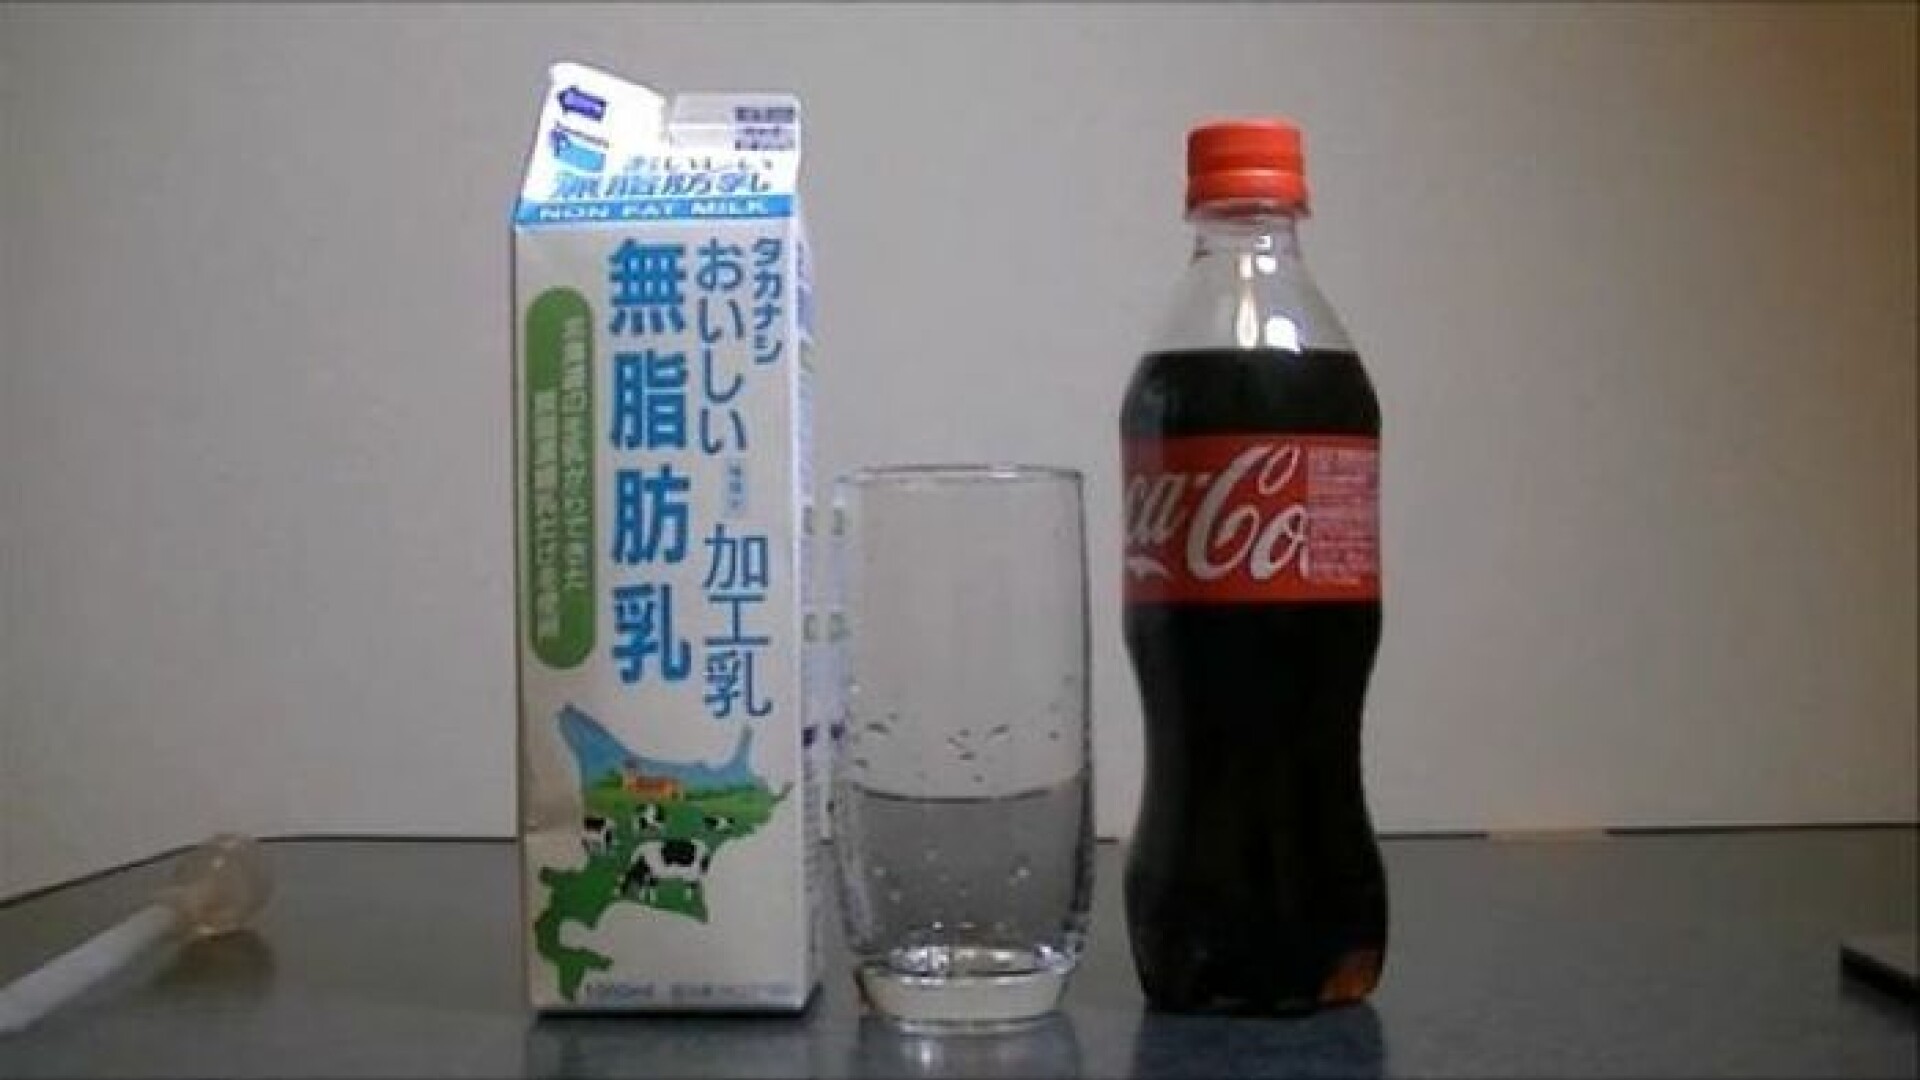 Lapte Cola